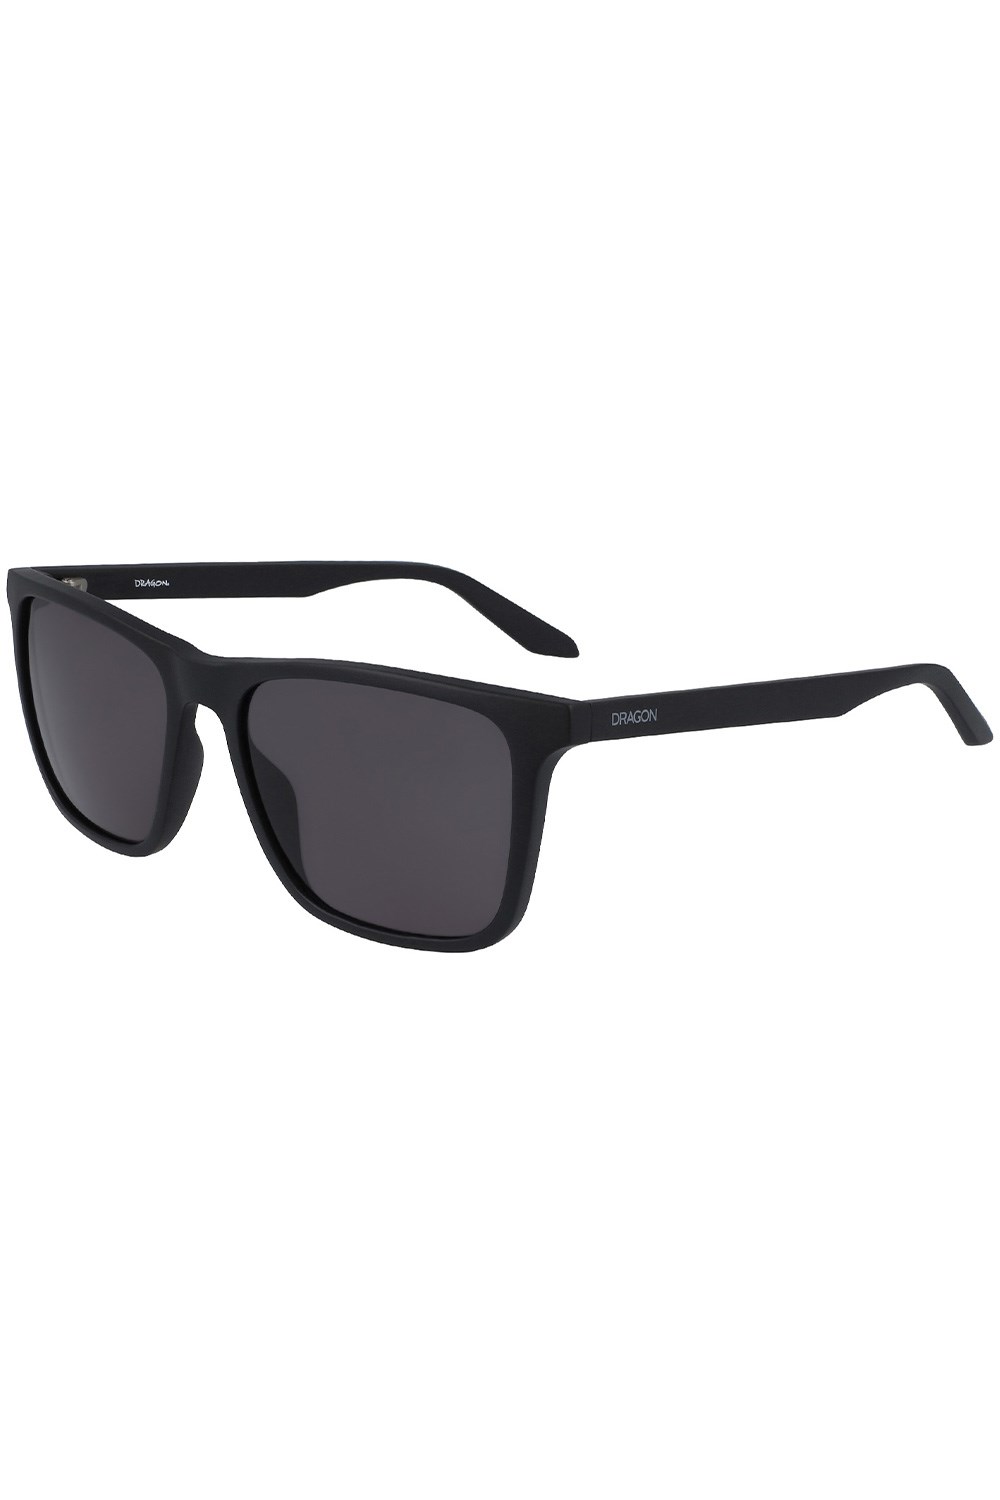 Renew Unisex Sunglasses -